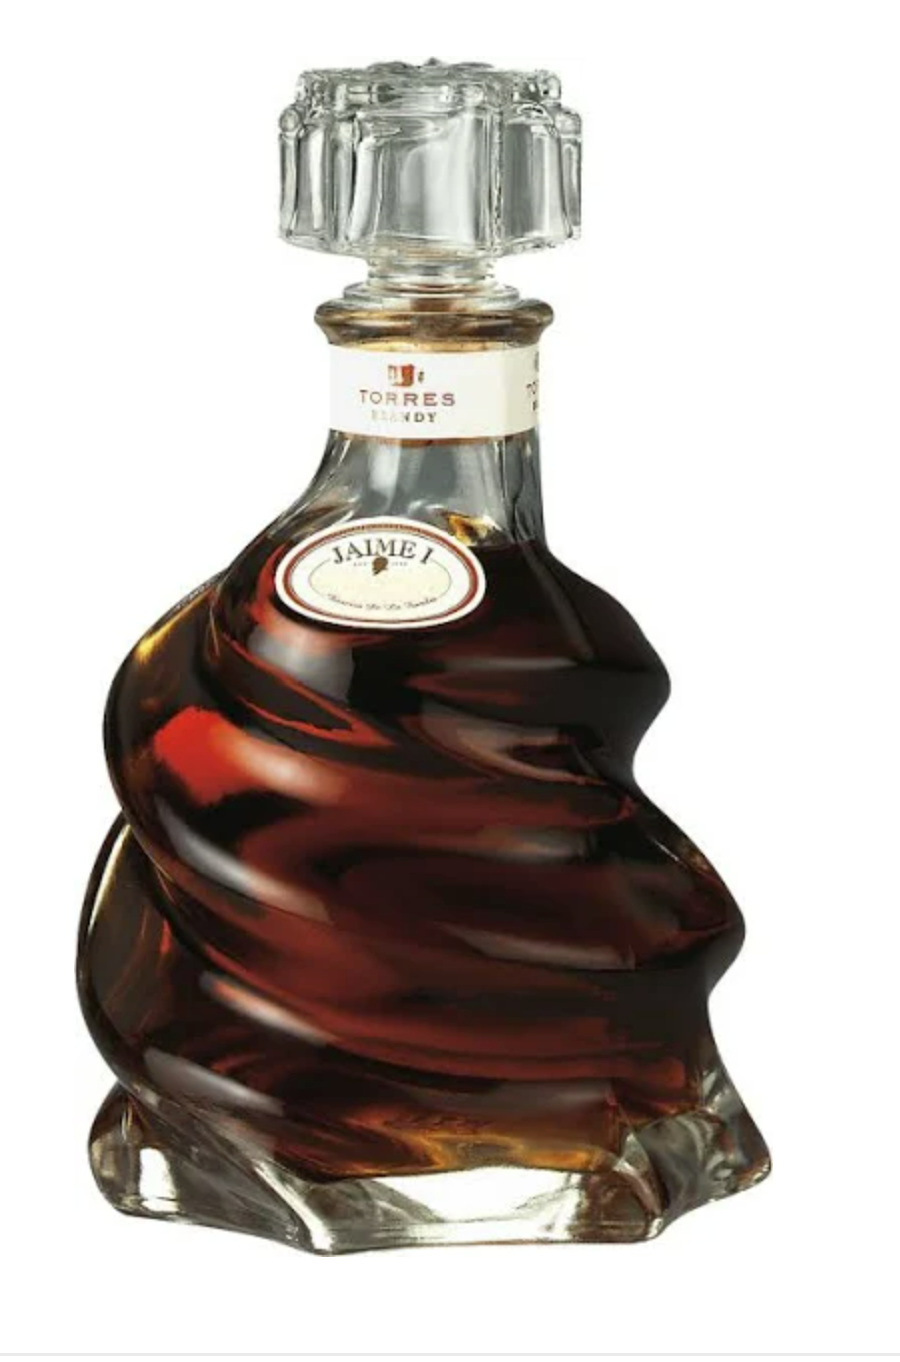 Torres Jaime 1 Brandy 750 ml